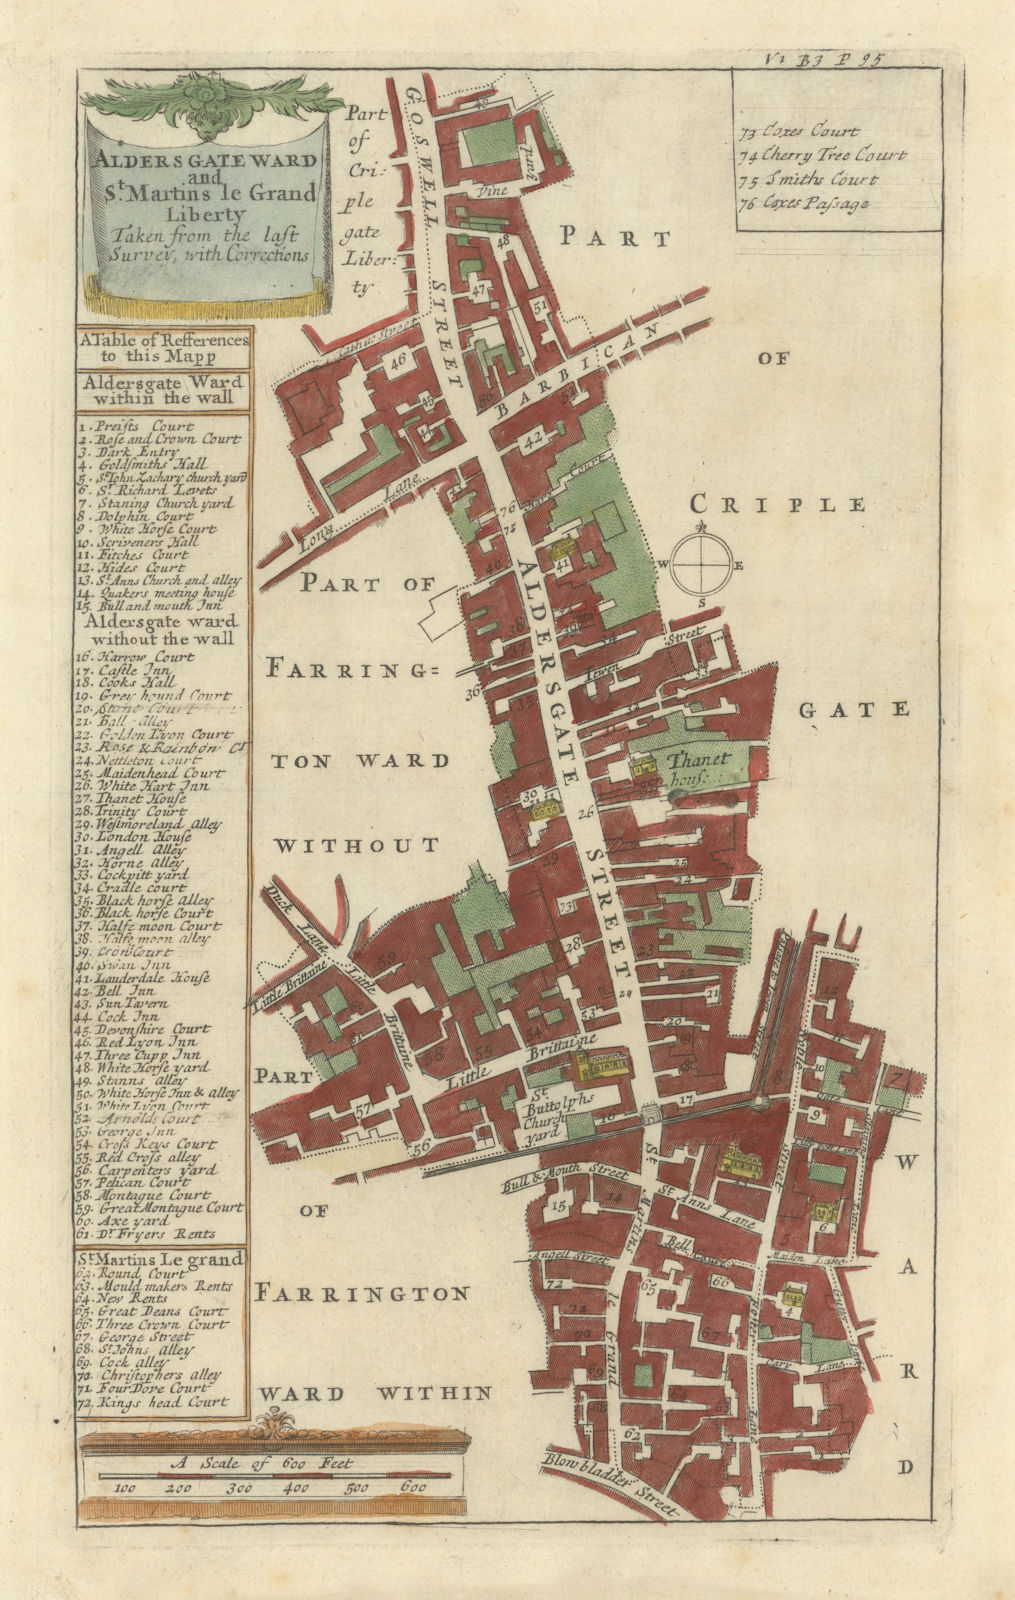 Aldersgate Ward & St Martins le Grand Liberty. London. STOW/STRYPE 1720 map